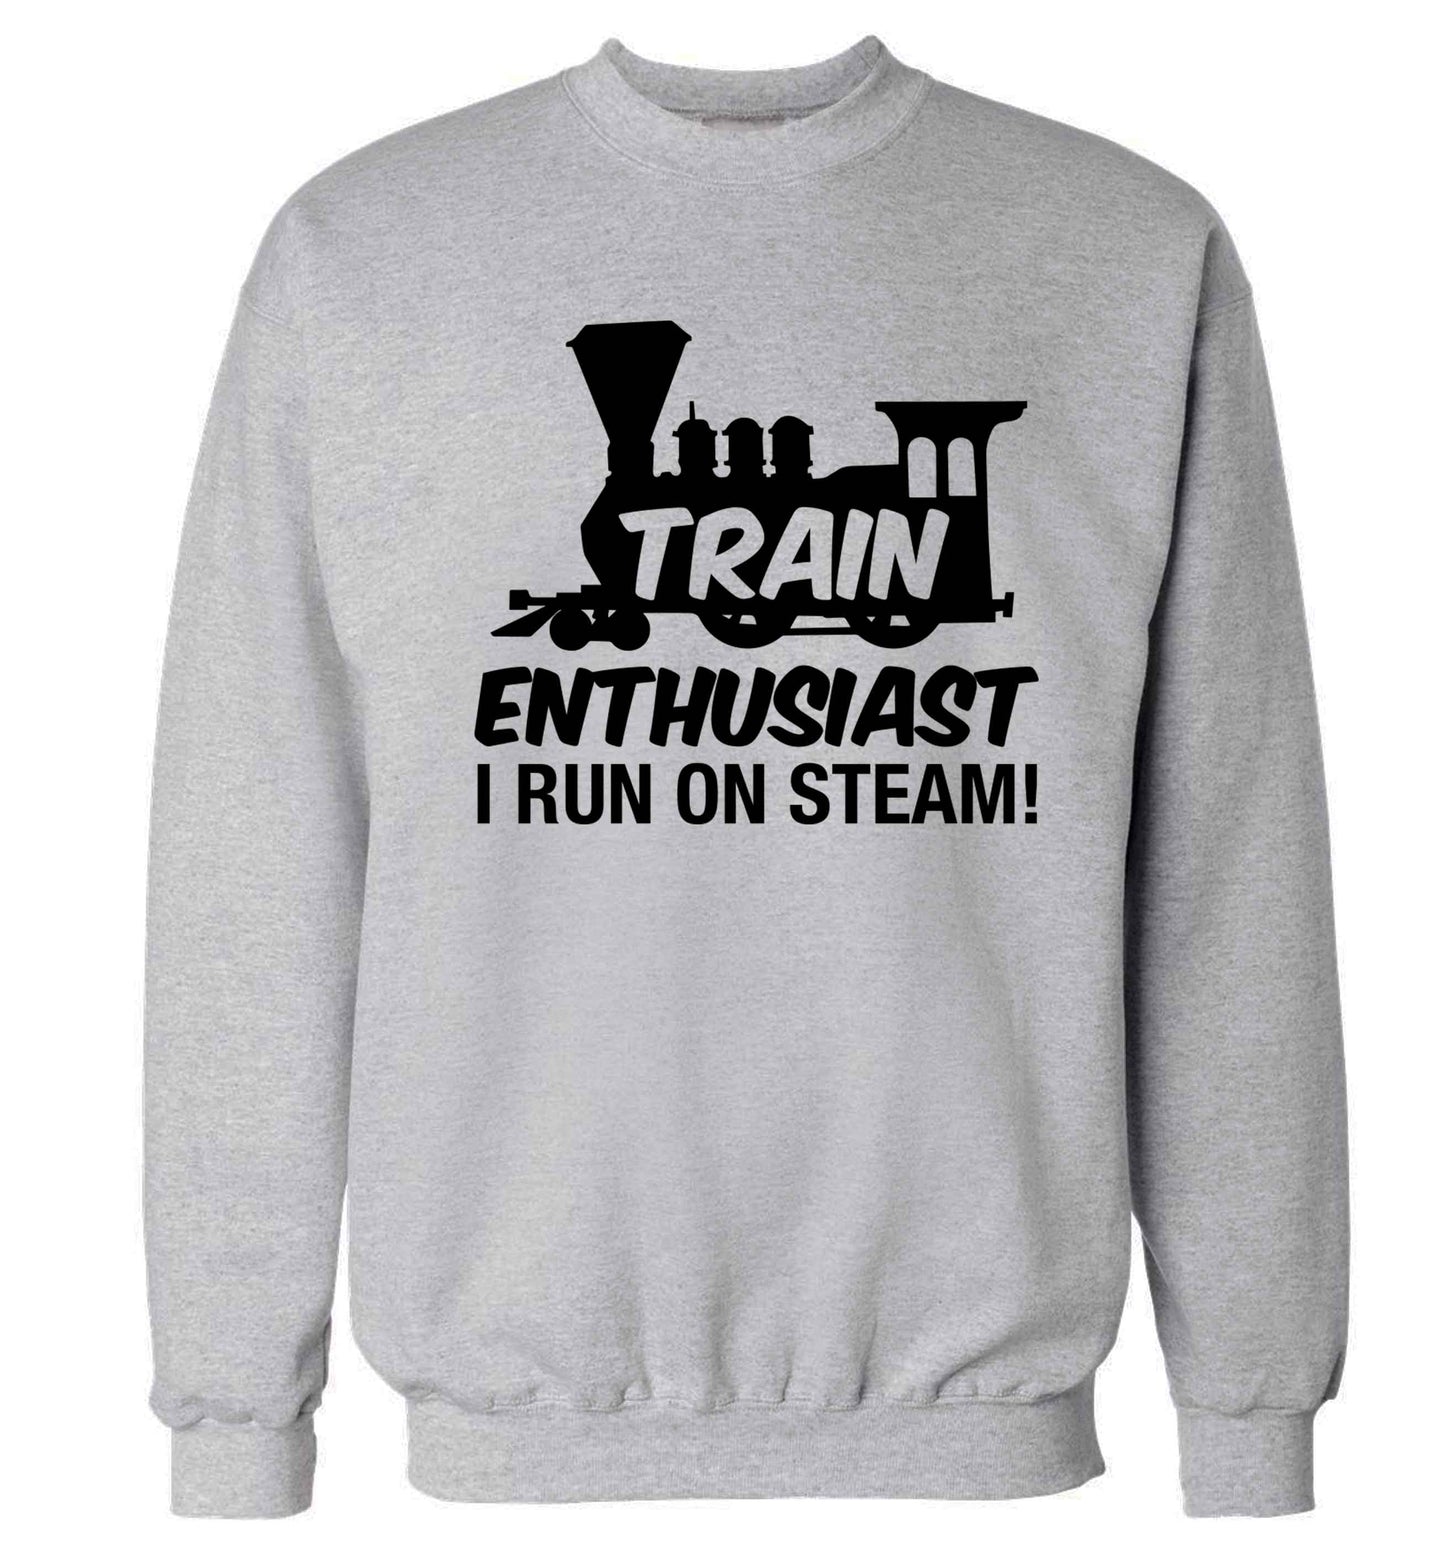 Train enthusiast I run on steam Adult's unisex grey Sweater 2XL